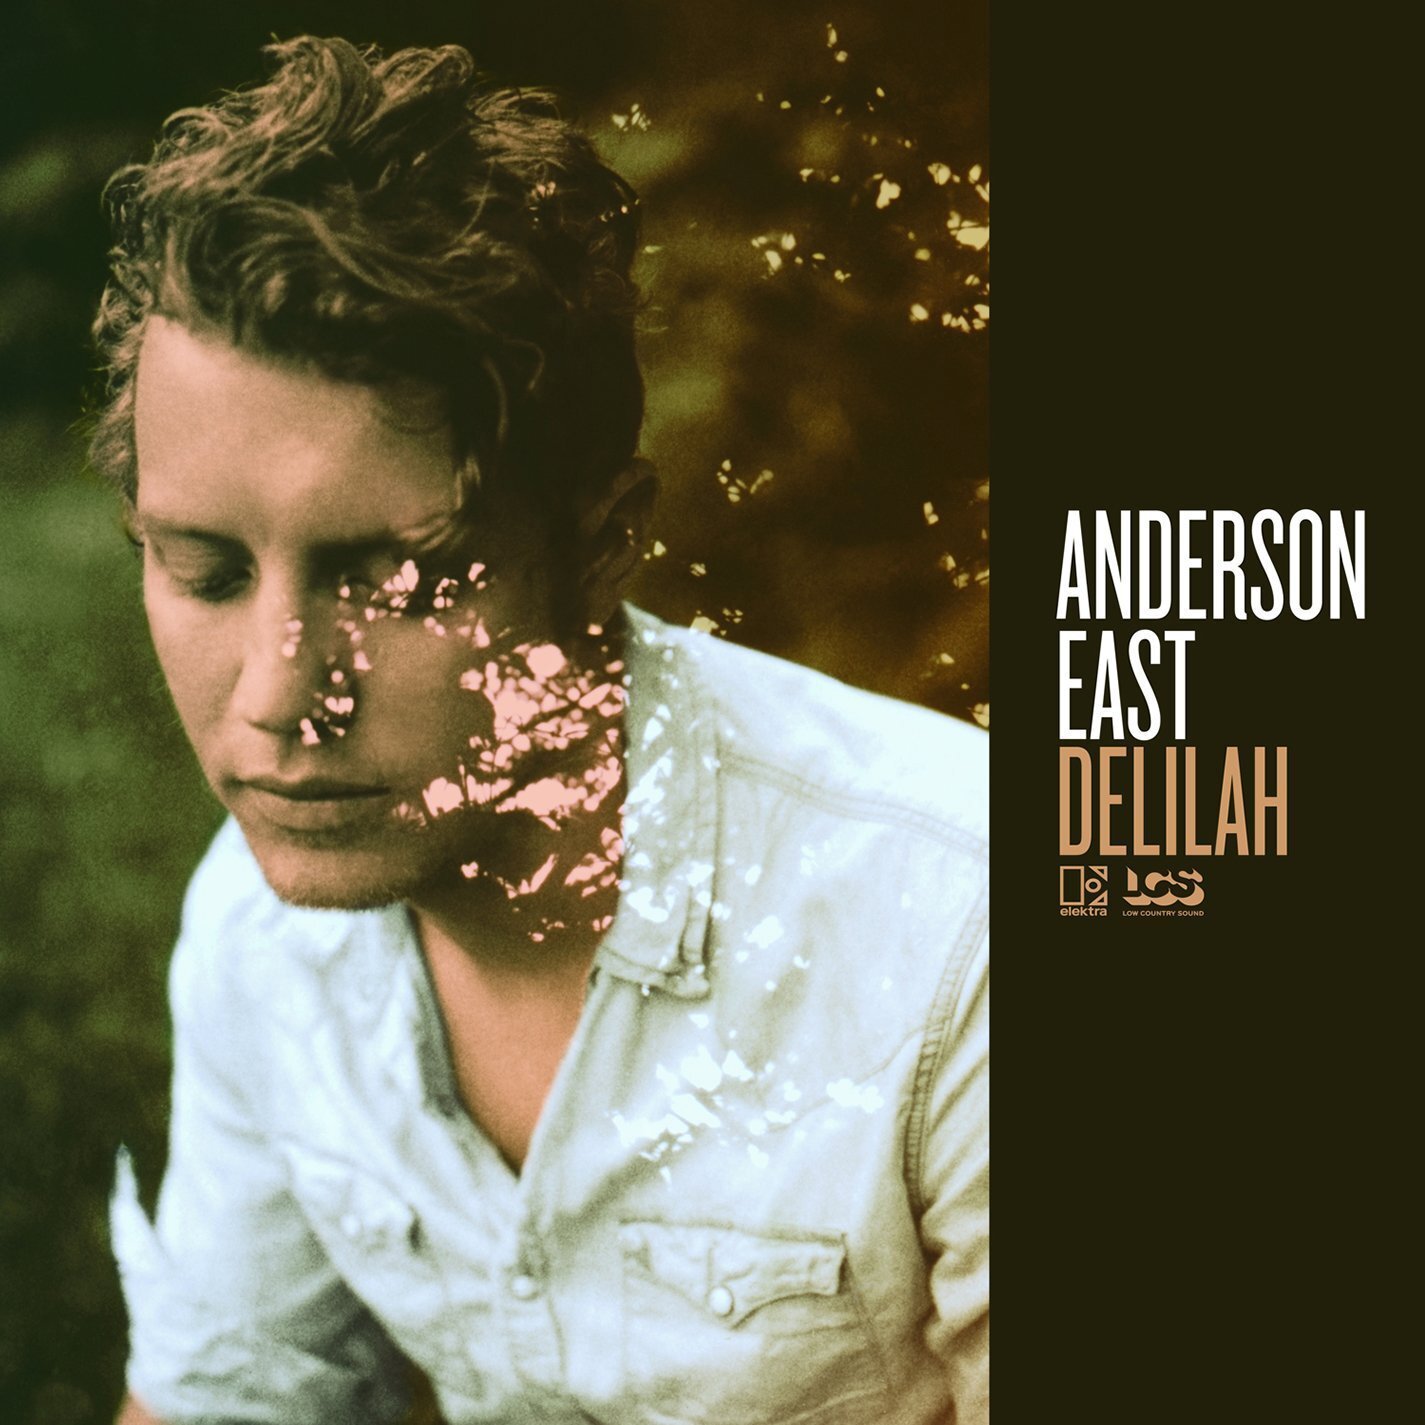 Anderson East Delilah brightmanmusic.com.jpg